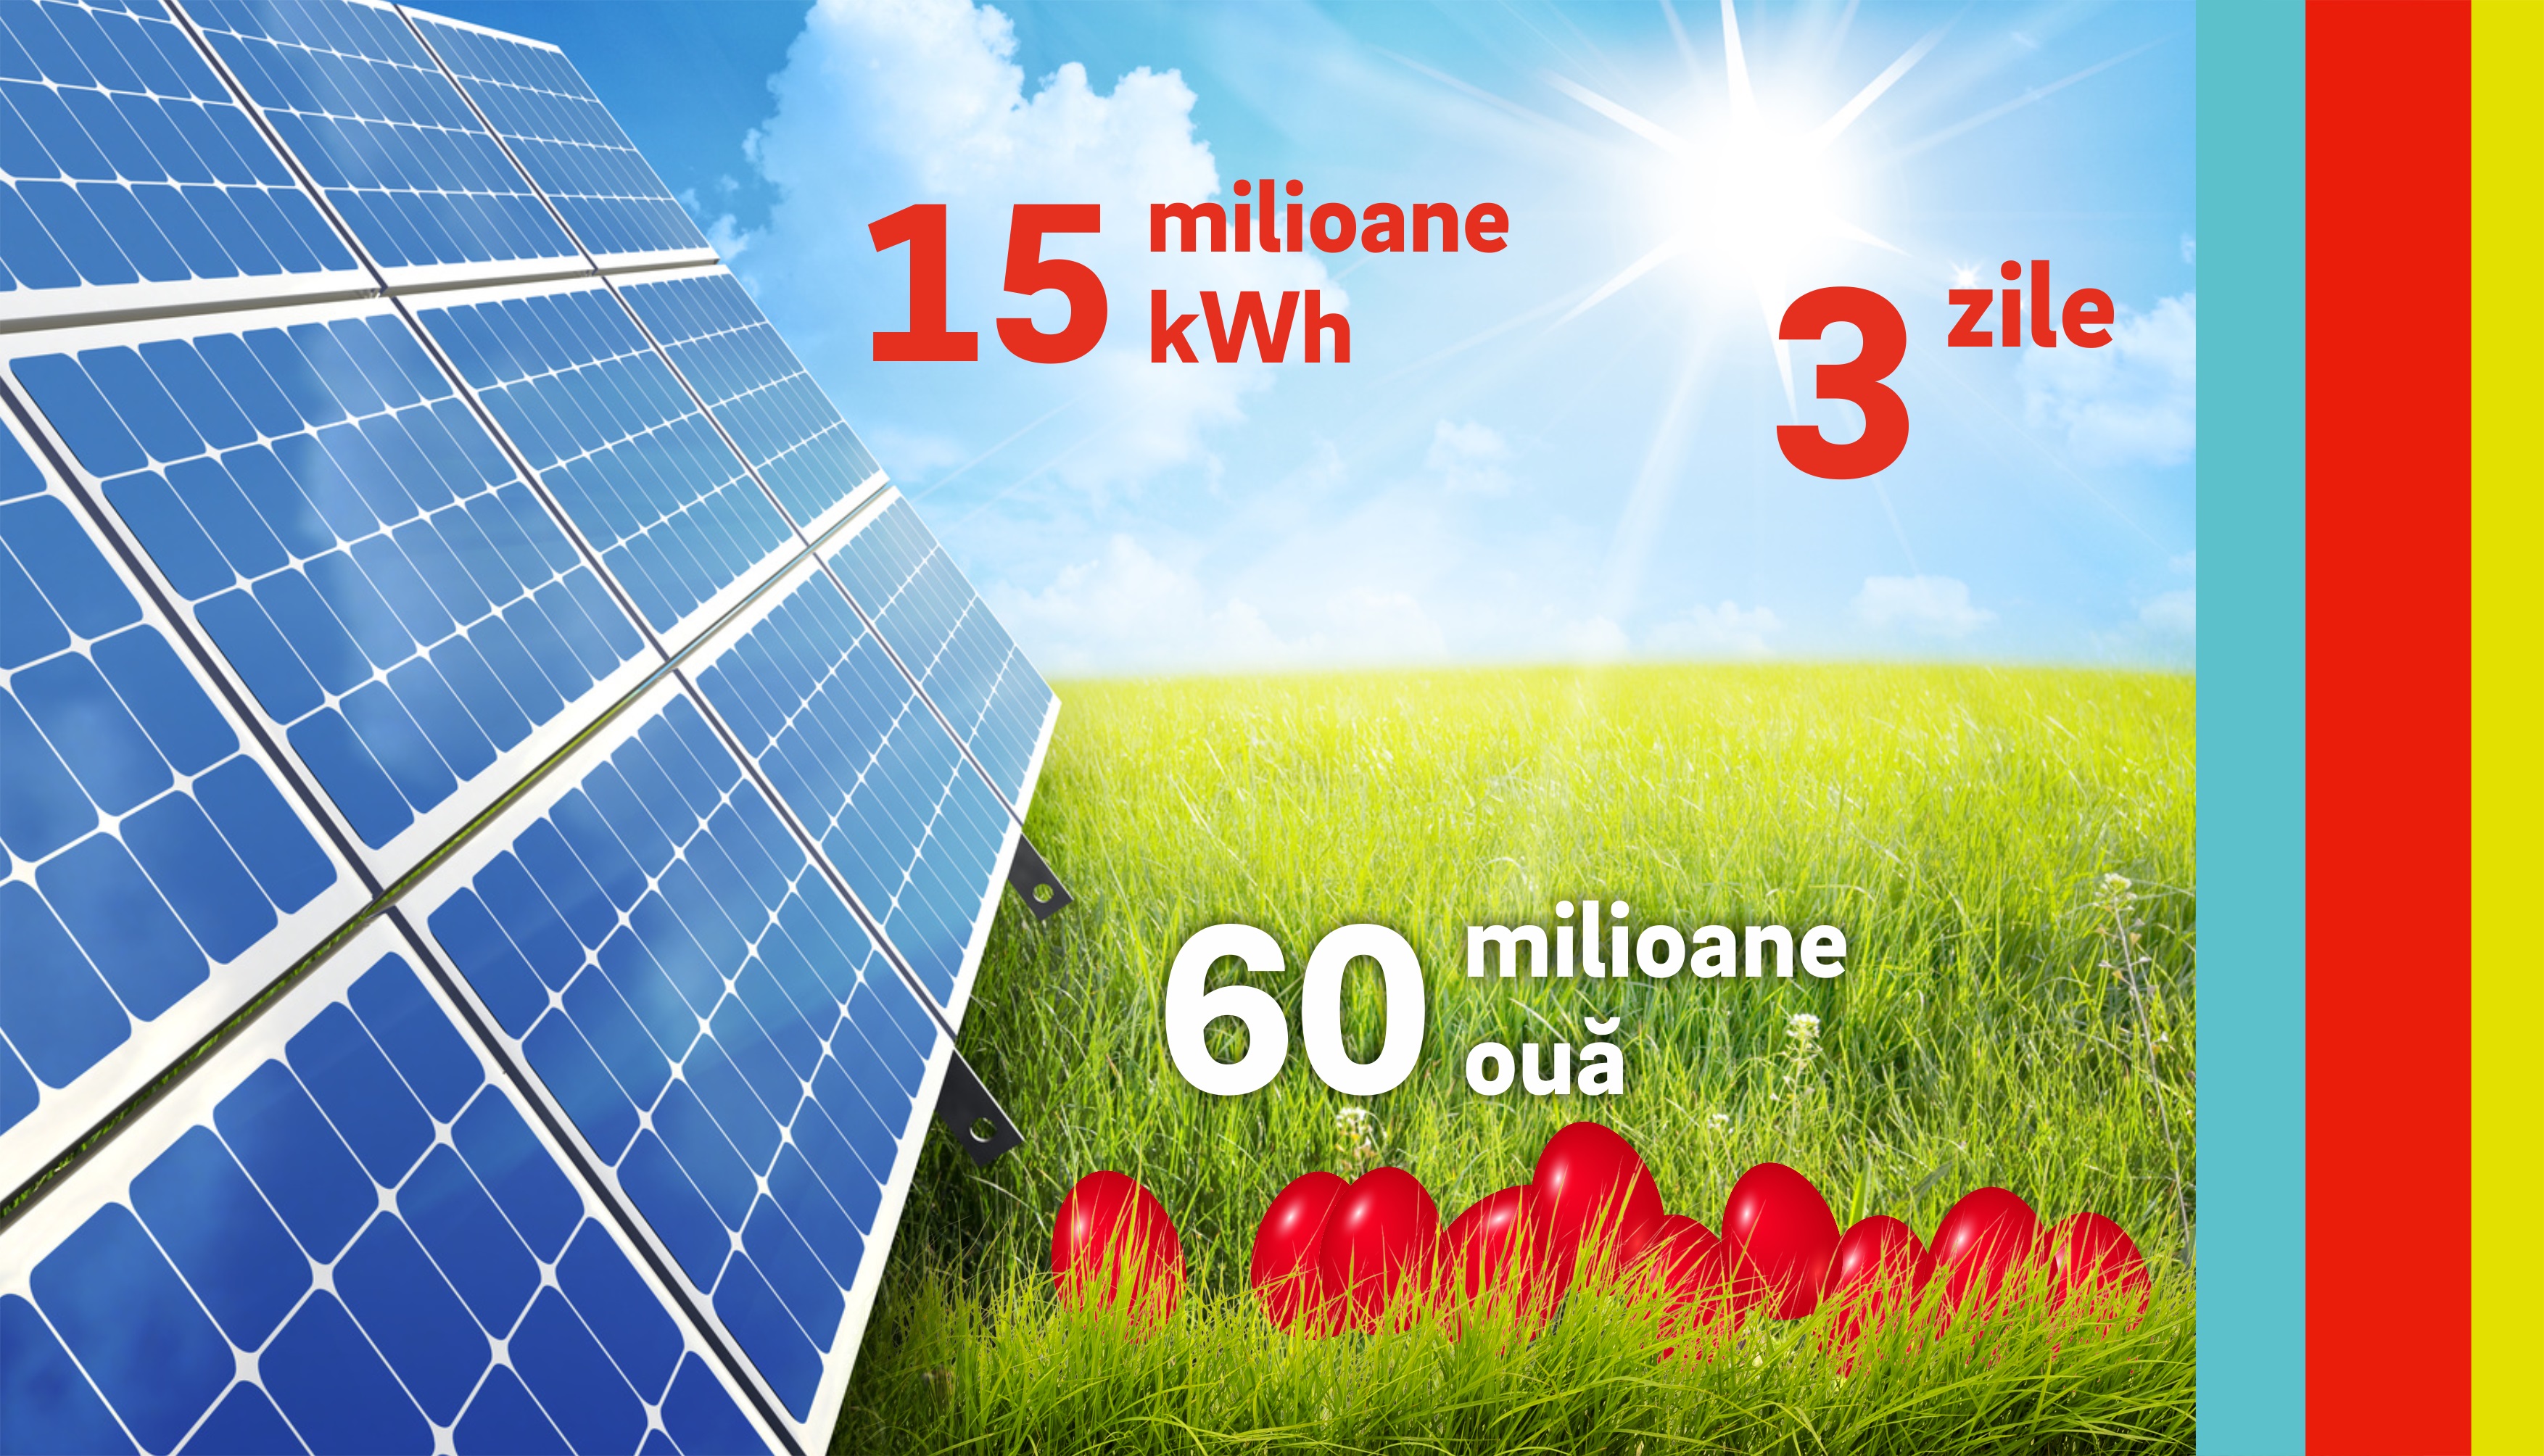 Energie solara oua Pasti Romania